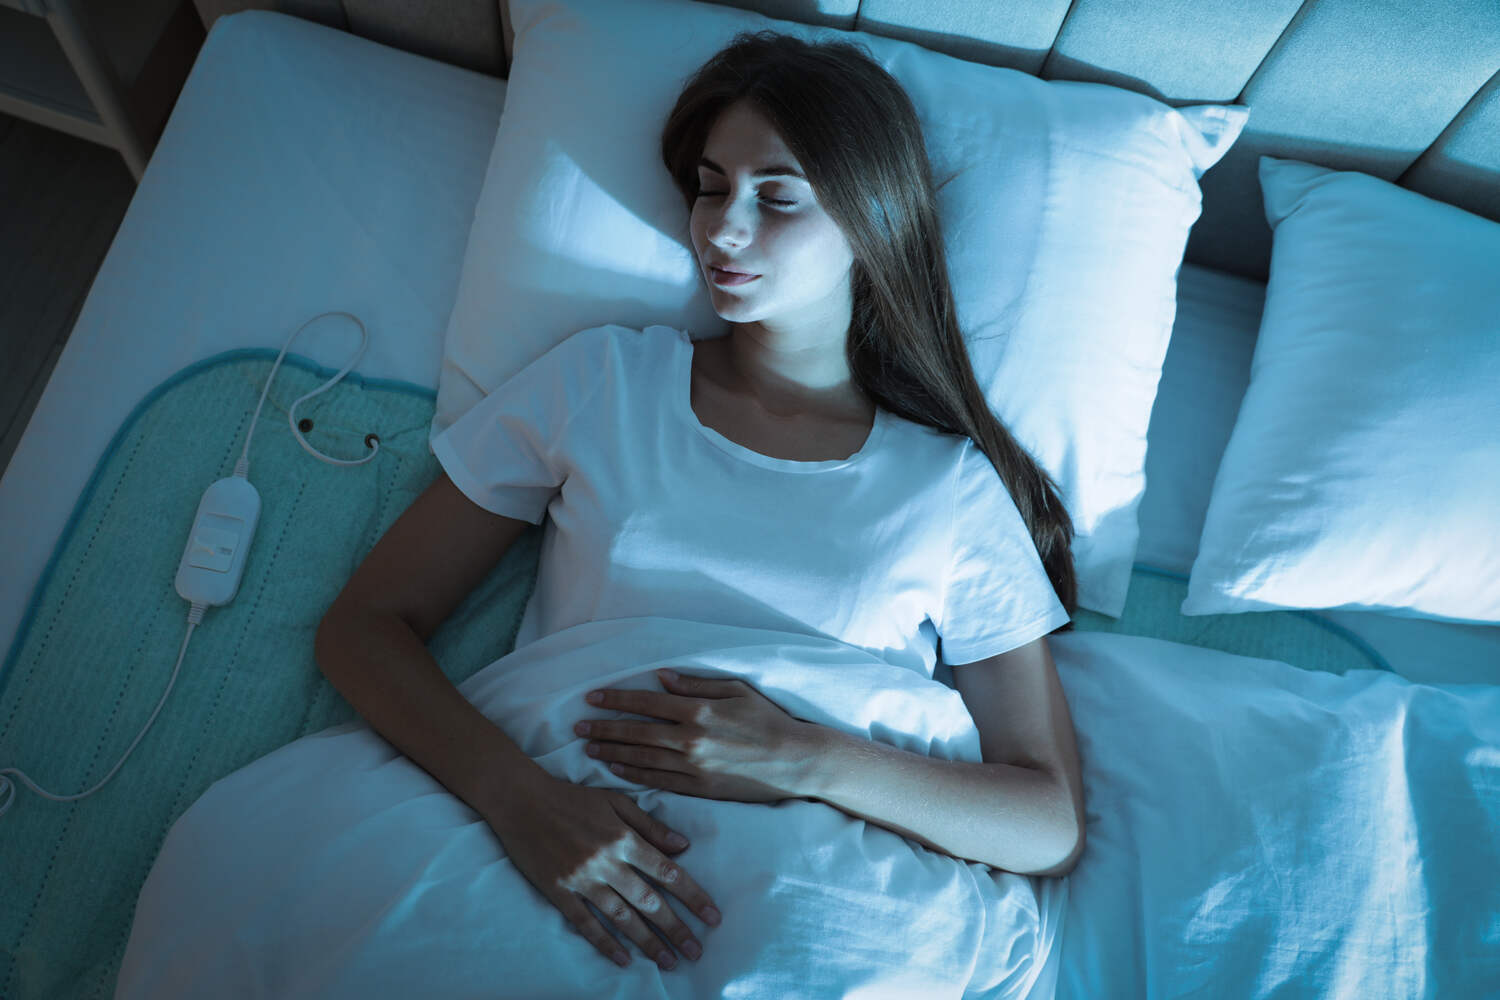 Electric Blanket During Pregnancy